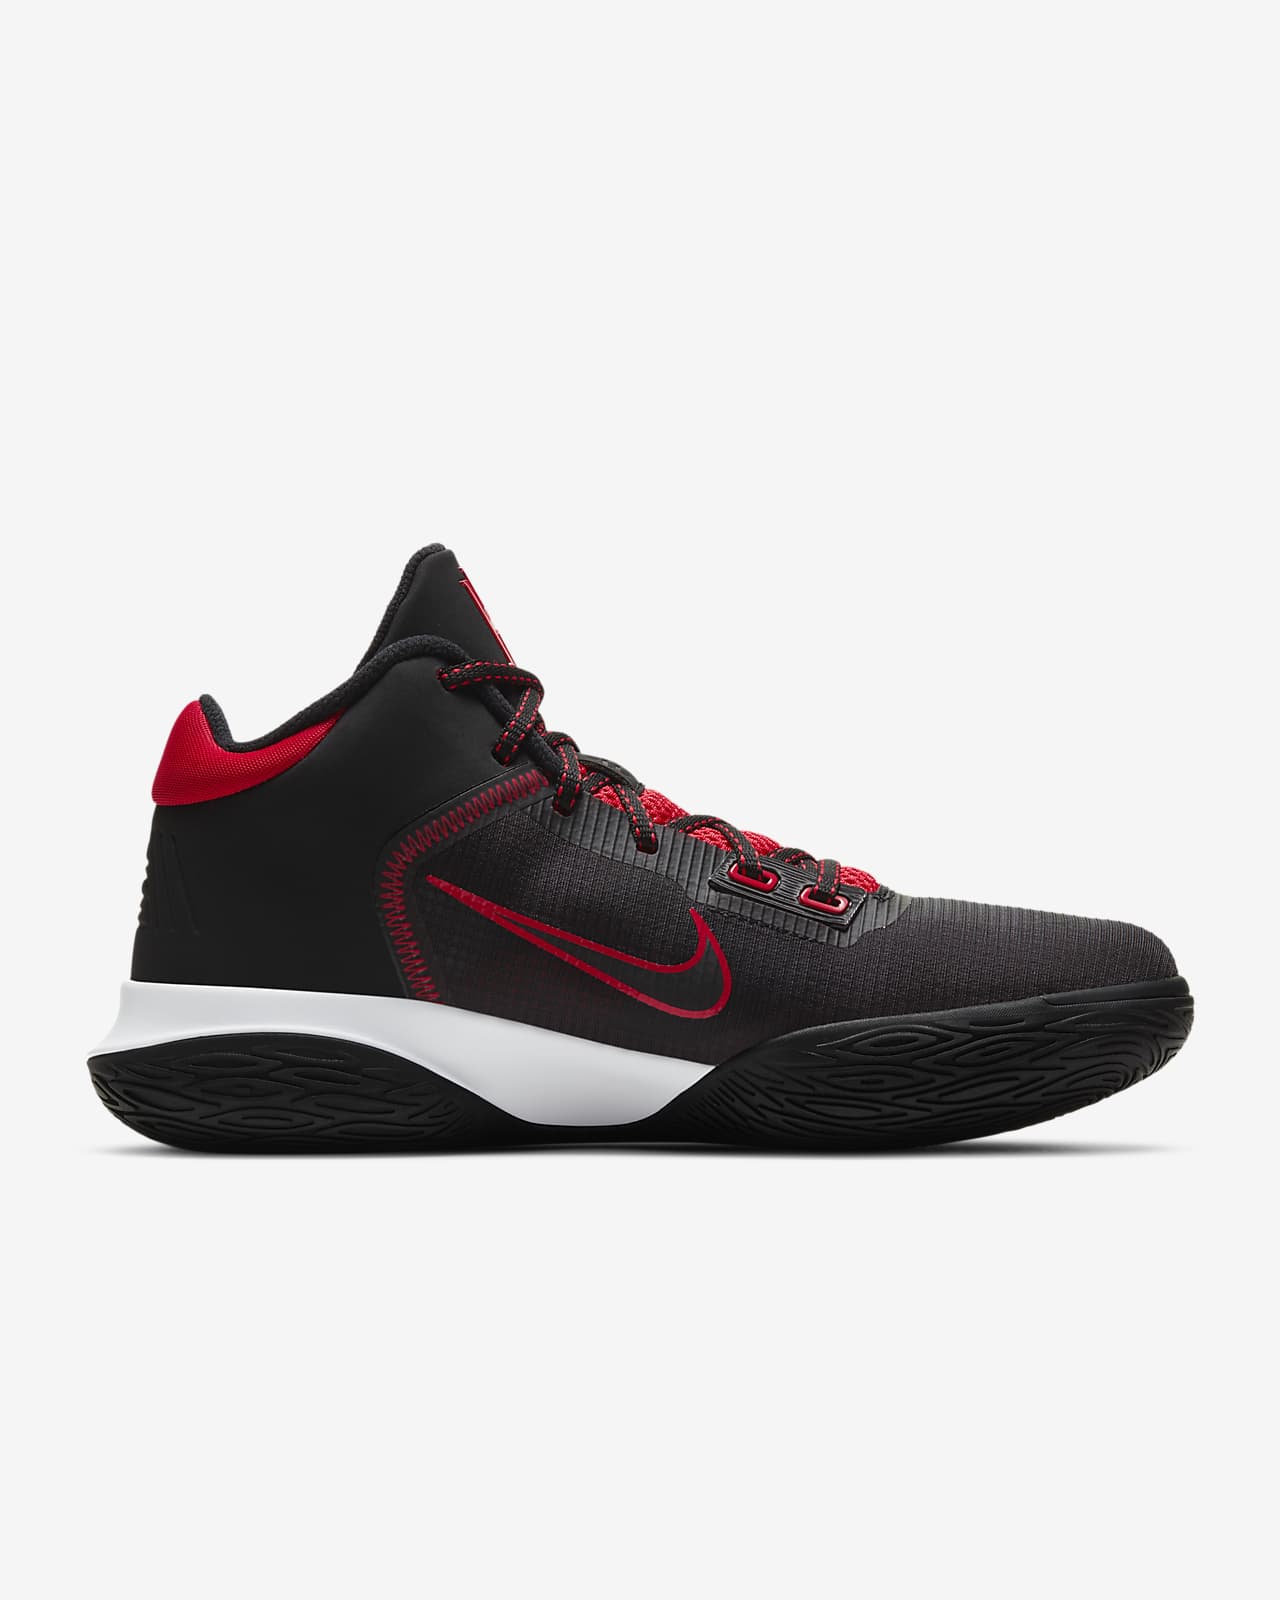 Kyrie Flytrap 4 EP Basketball Shoe. Nike ID